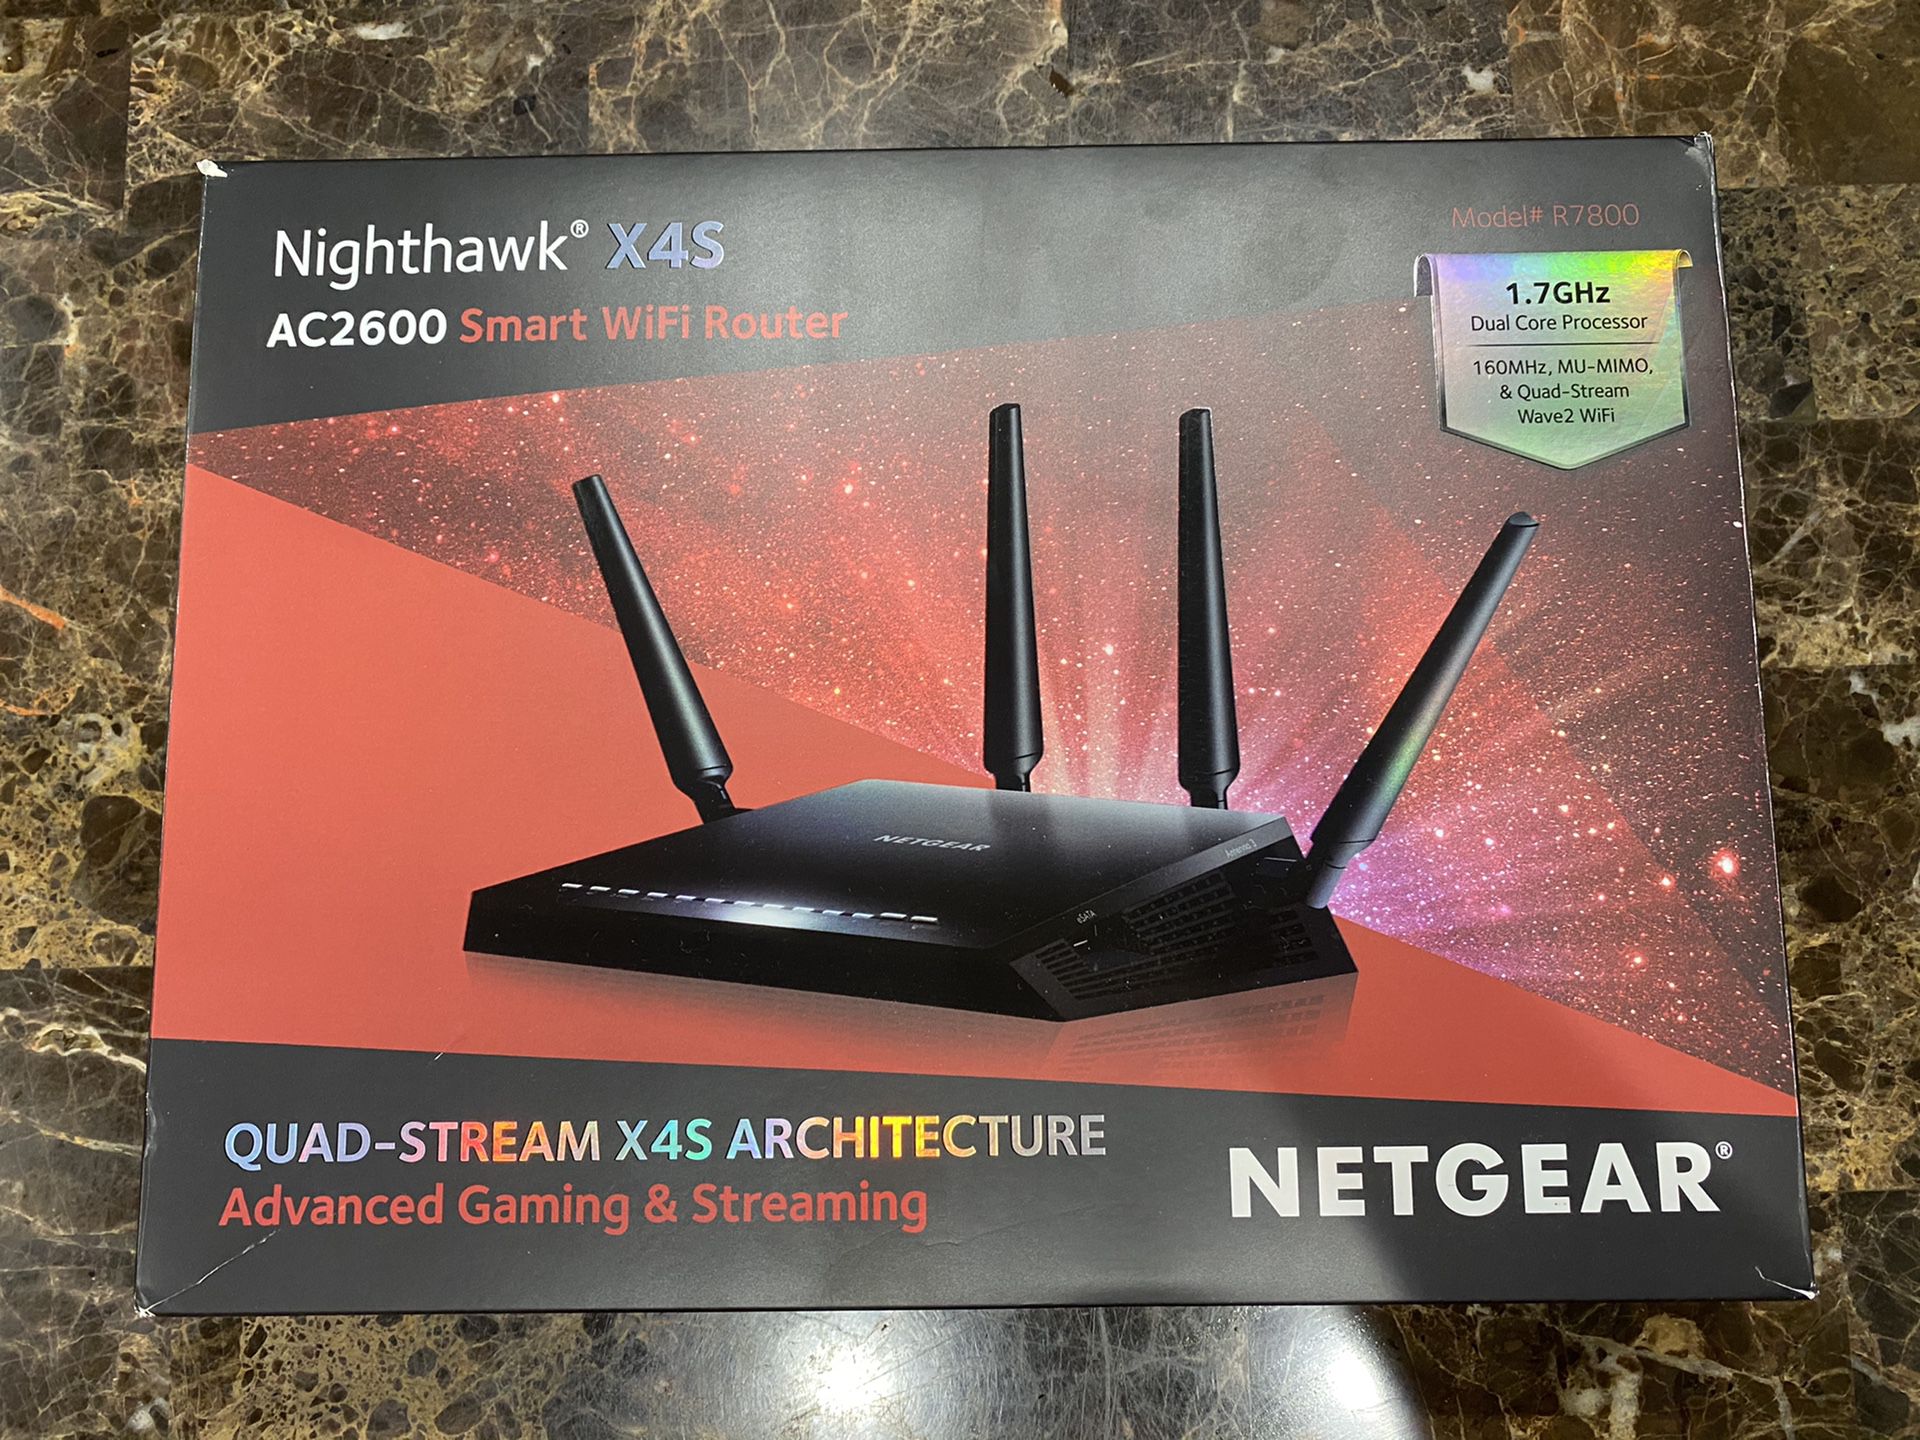 Netgear Nighthawk X4S Smart WiFi Router (R7800) - AC2600